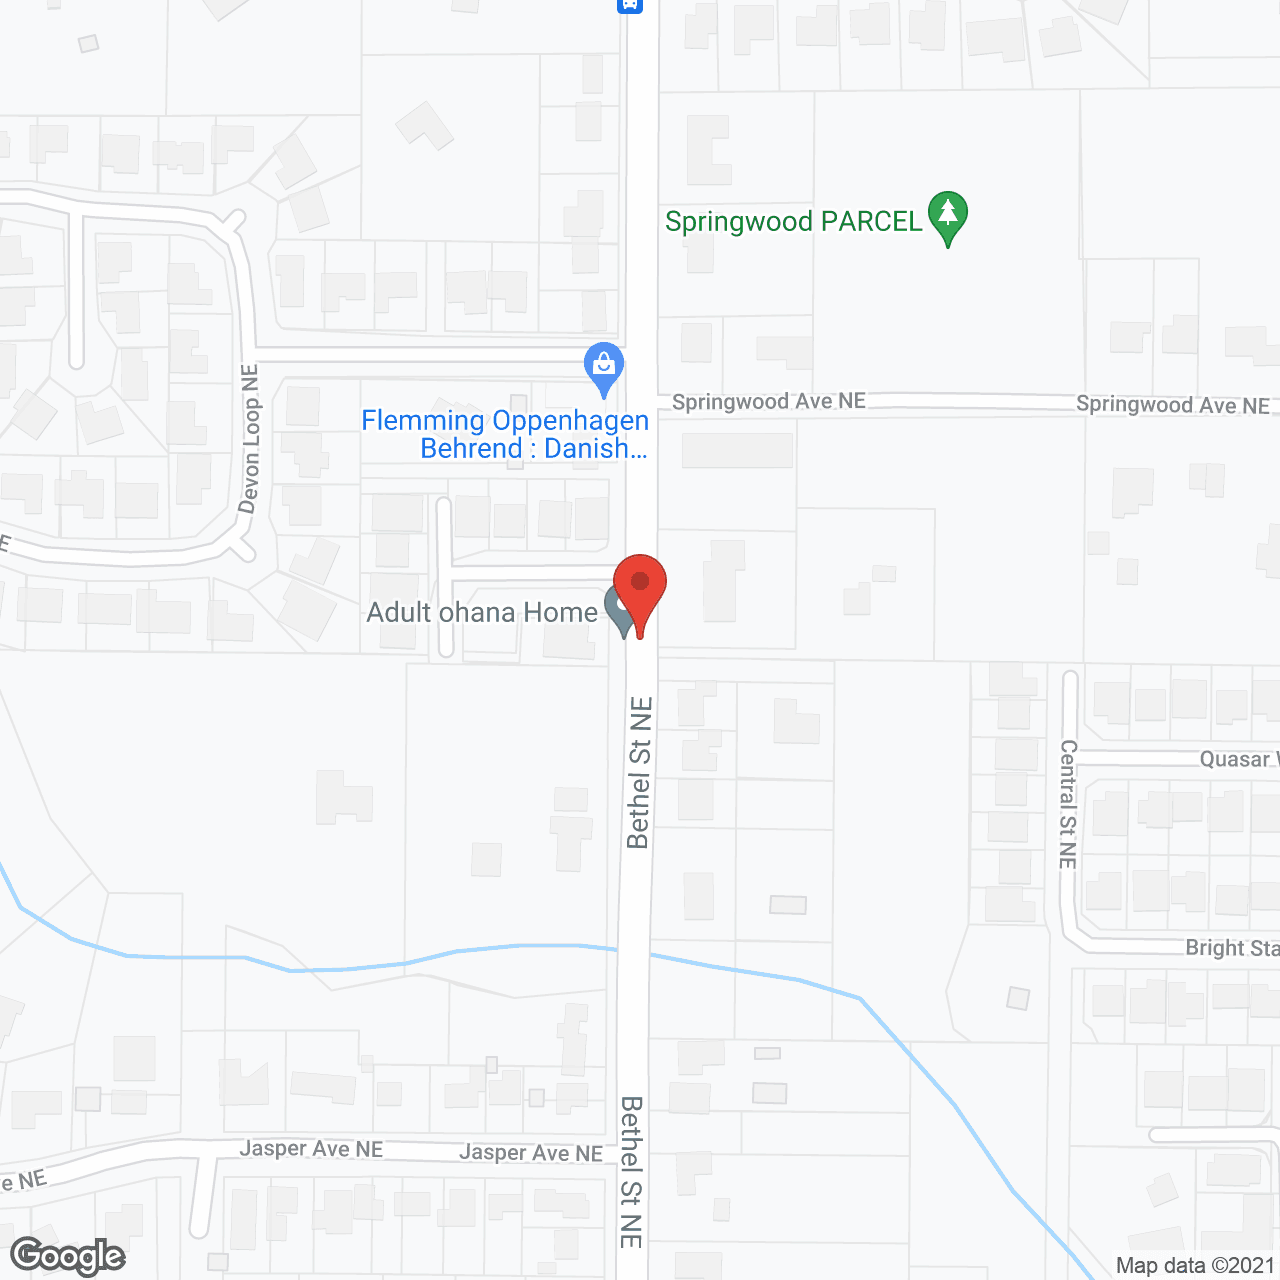 Adult Ohana Home in google map